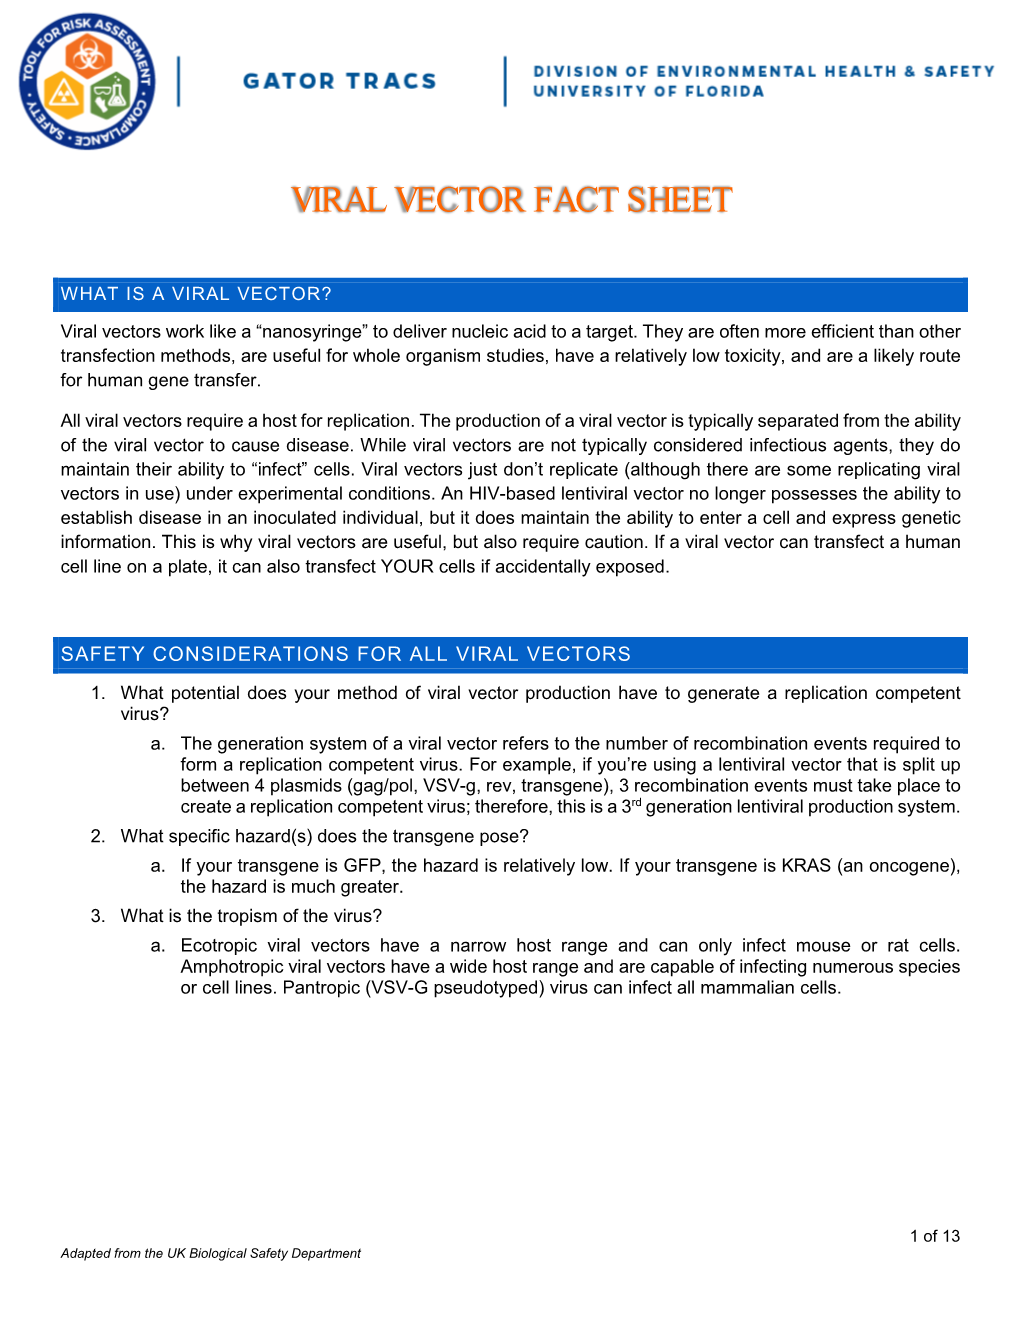 Viral Vector Fact Sheet